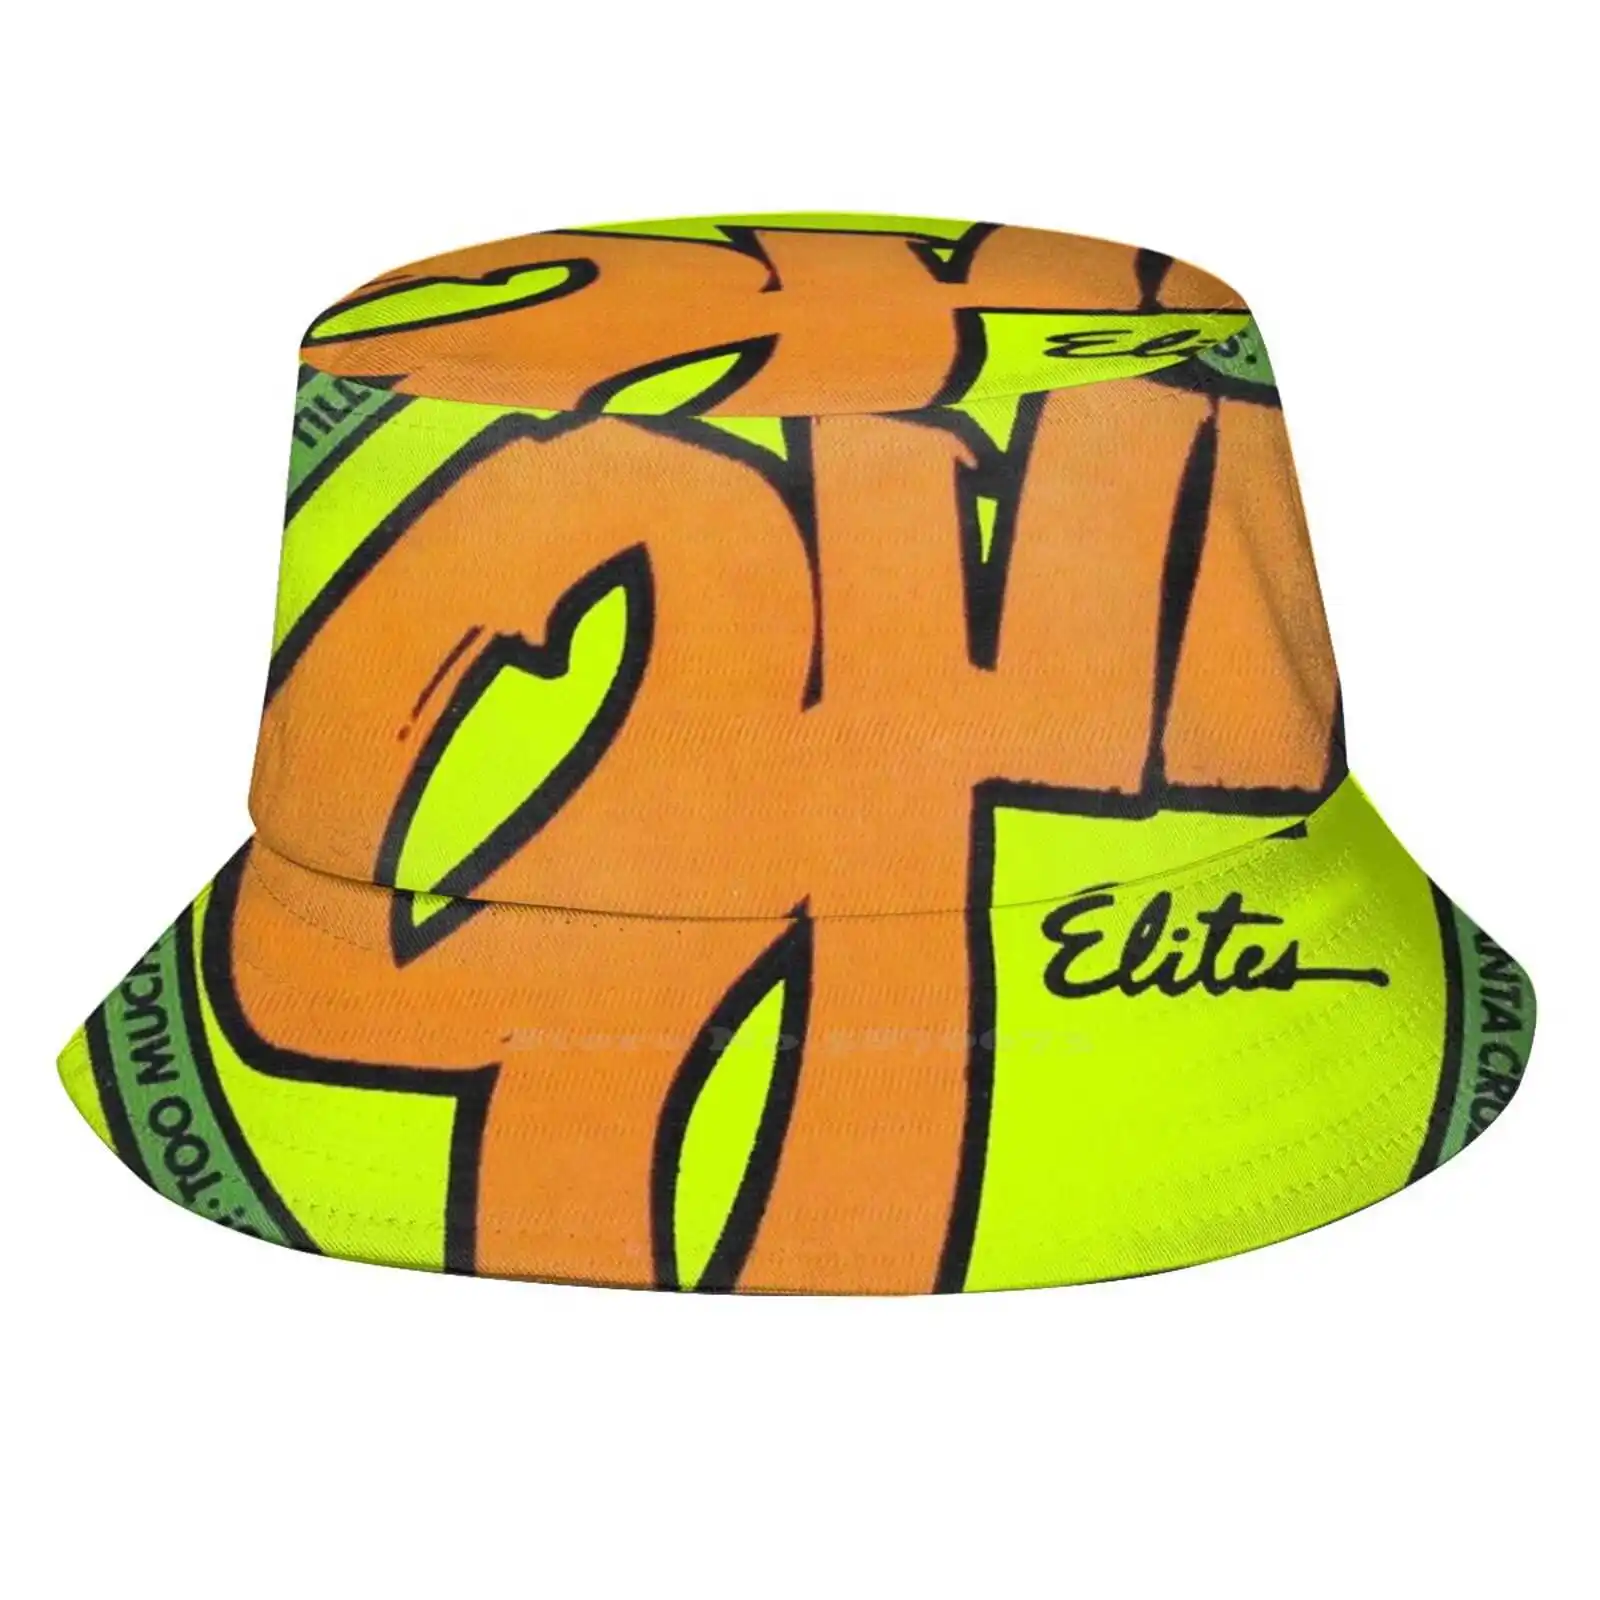 

Ouii Elites, дизайн футболки для скейтборда. Панама с принтом, шляпа от солнца, симпатичная забавная музыкальная ностальгия из фильма «Старая школа»